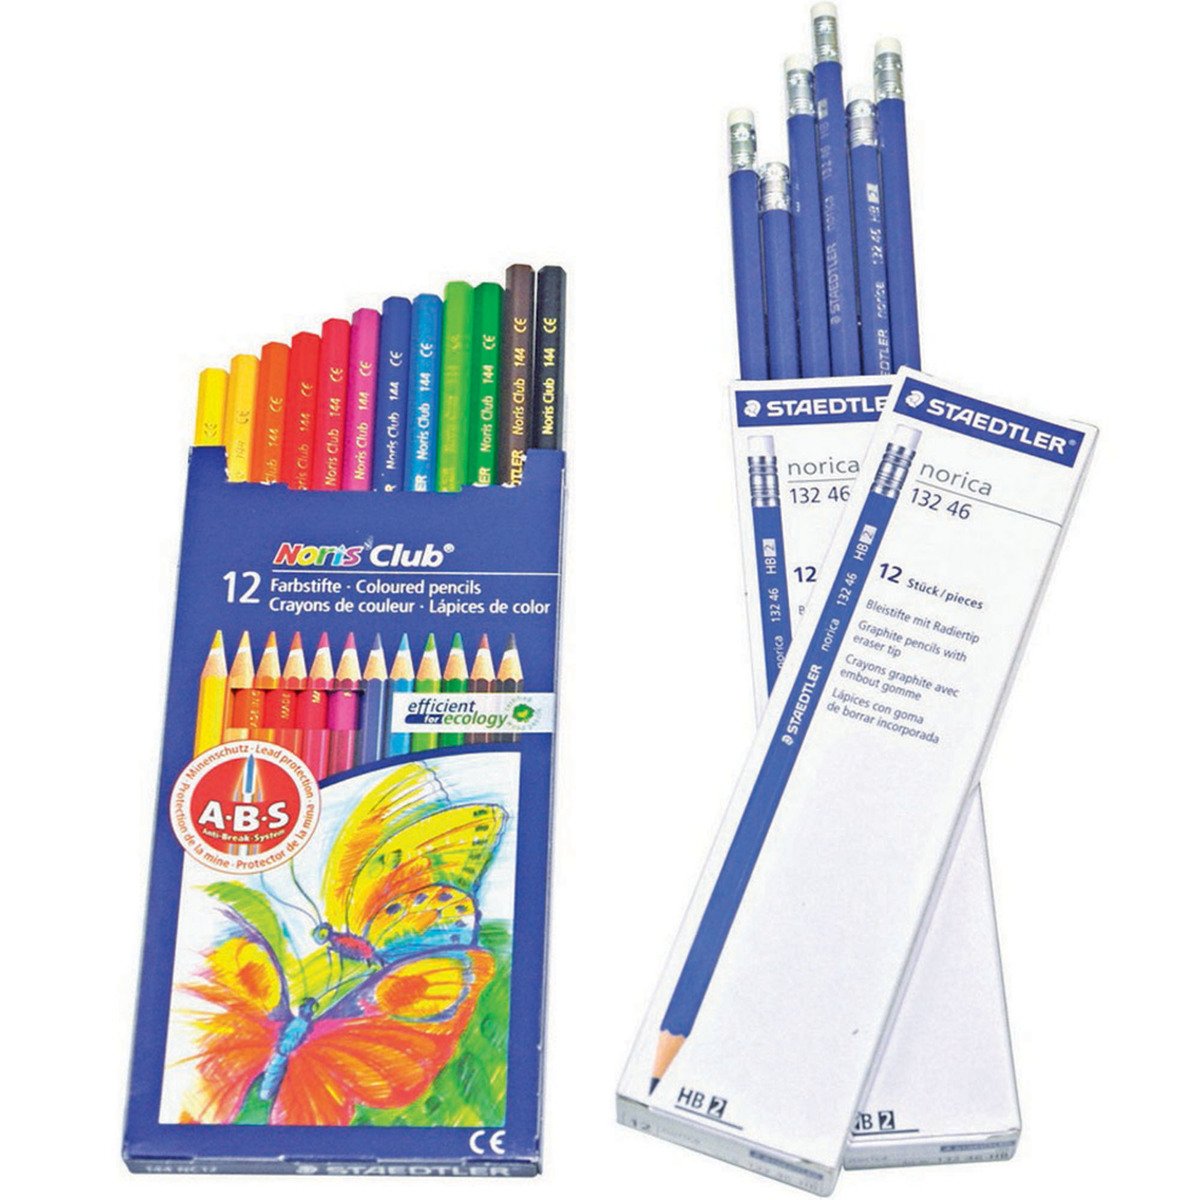 Staedtler HB Pencil2x12 Pieces + Color Pencil 12 Pieces